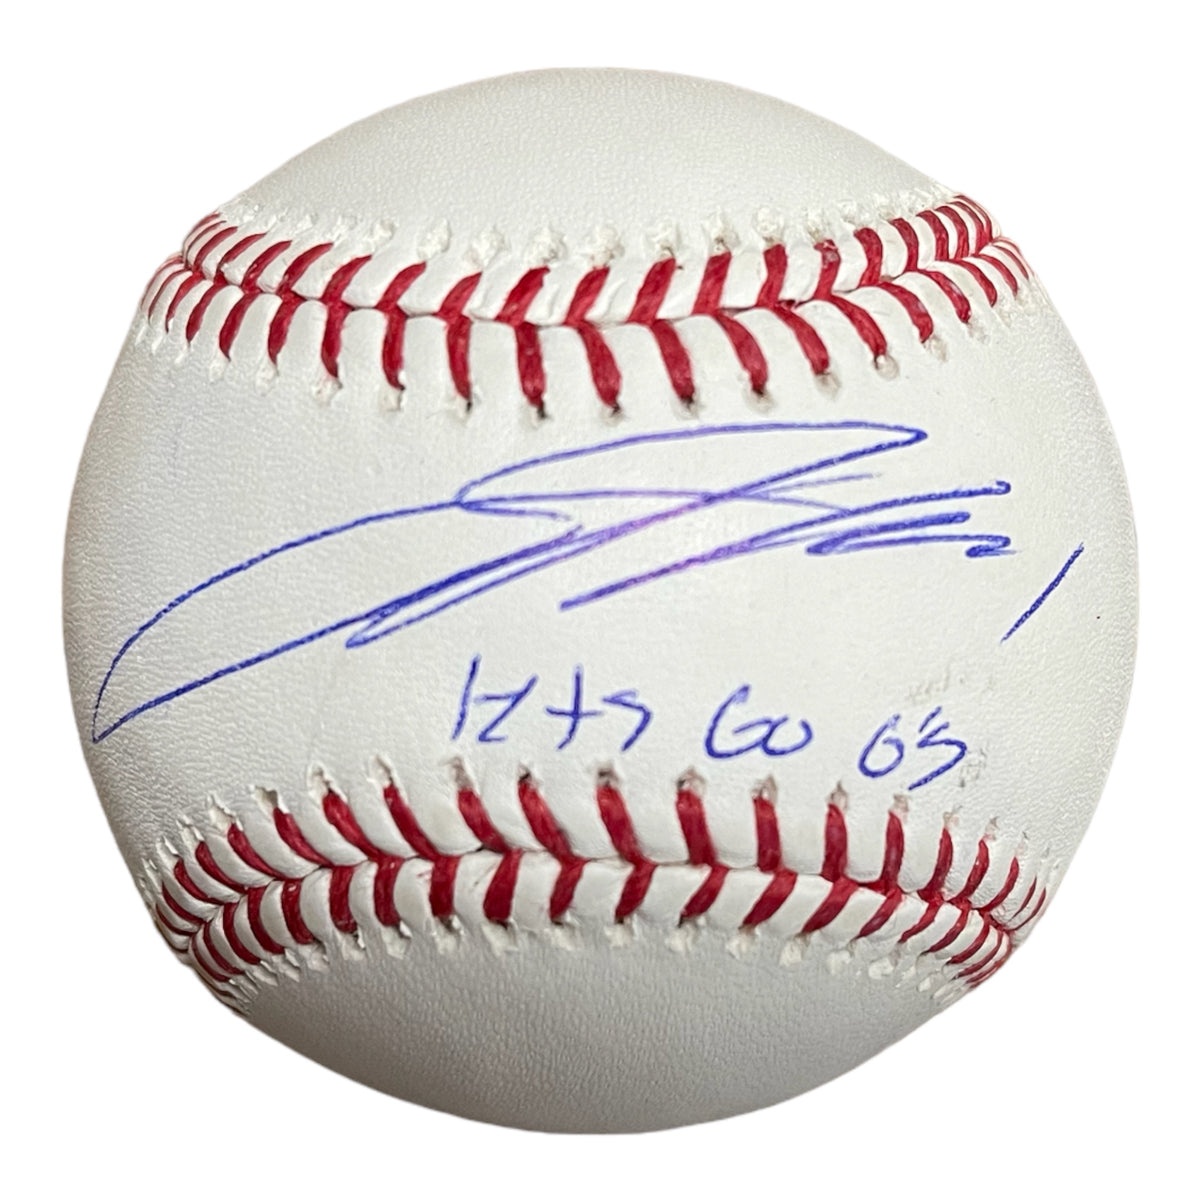 Jackson Holliday Autographed OMLB Baseball with JSA Certificate of